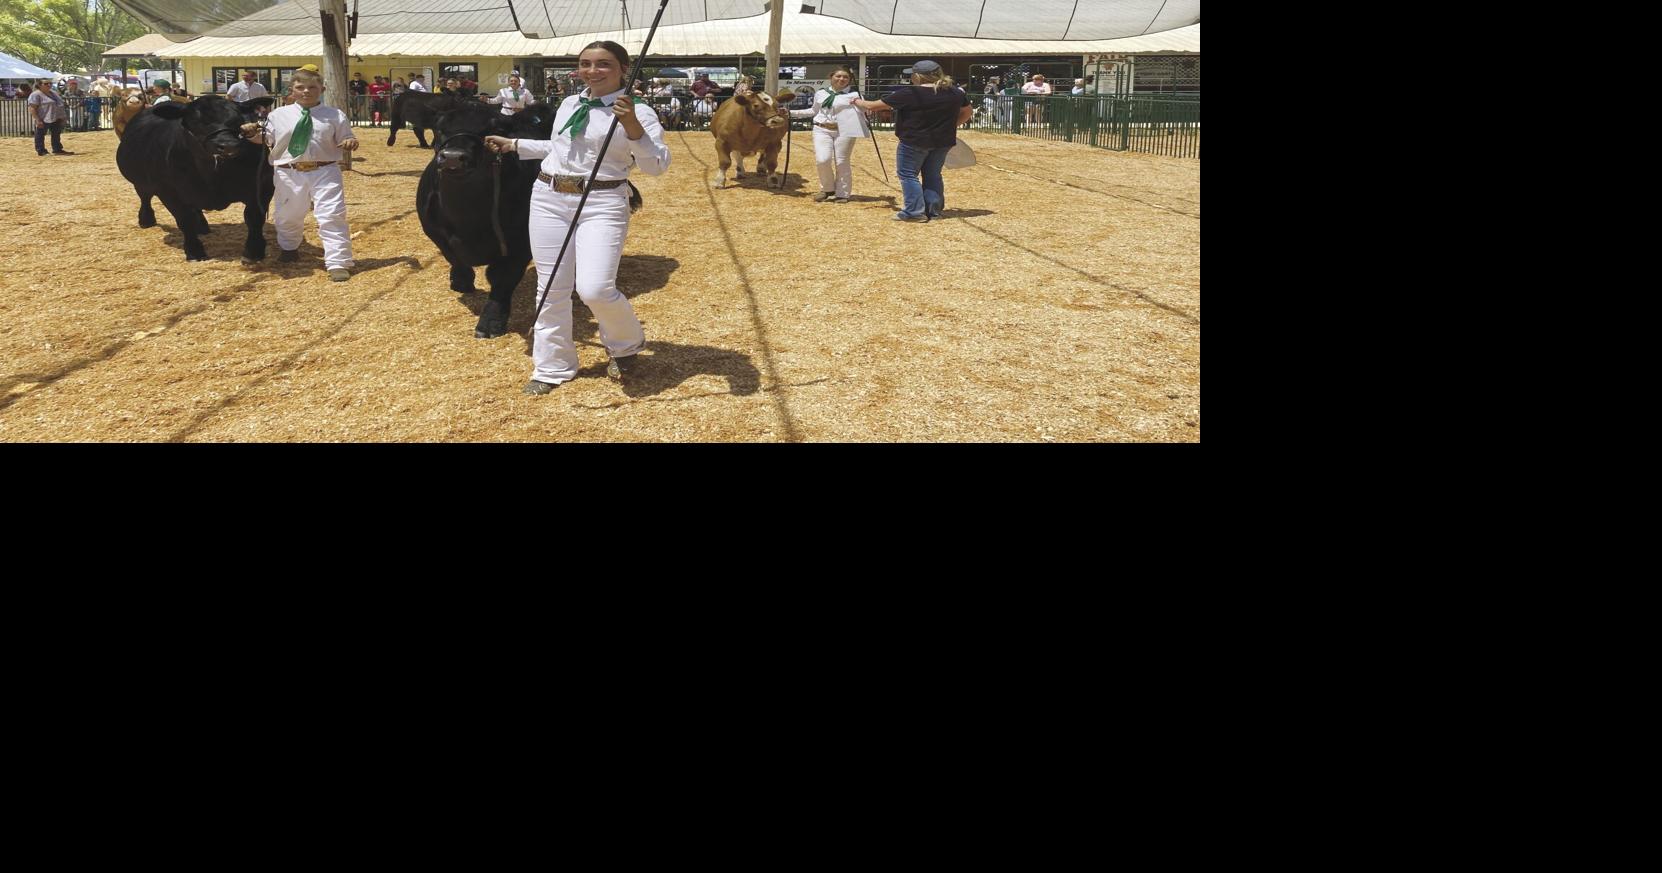 Livestock show kicks off Yuba-Sutter Fair | News | appeal-democrat.com